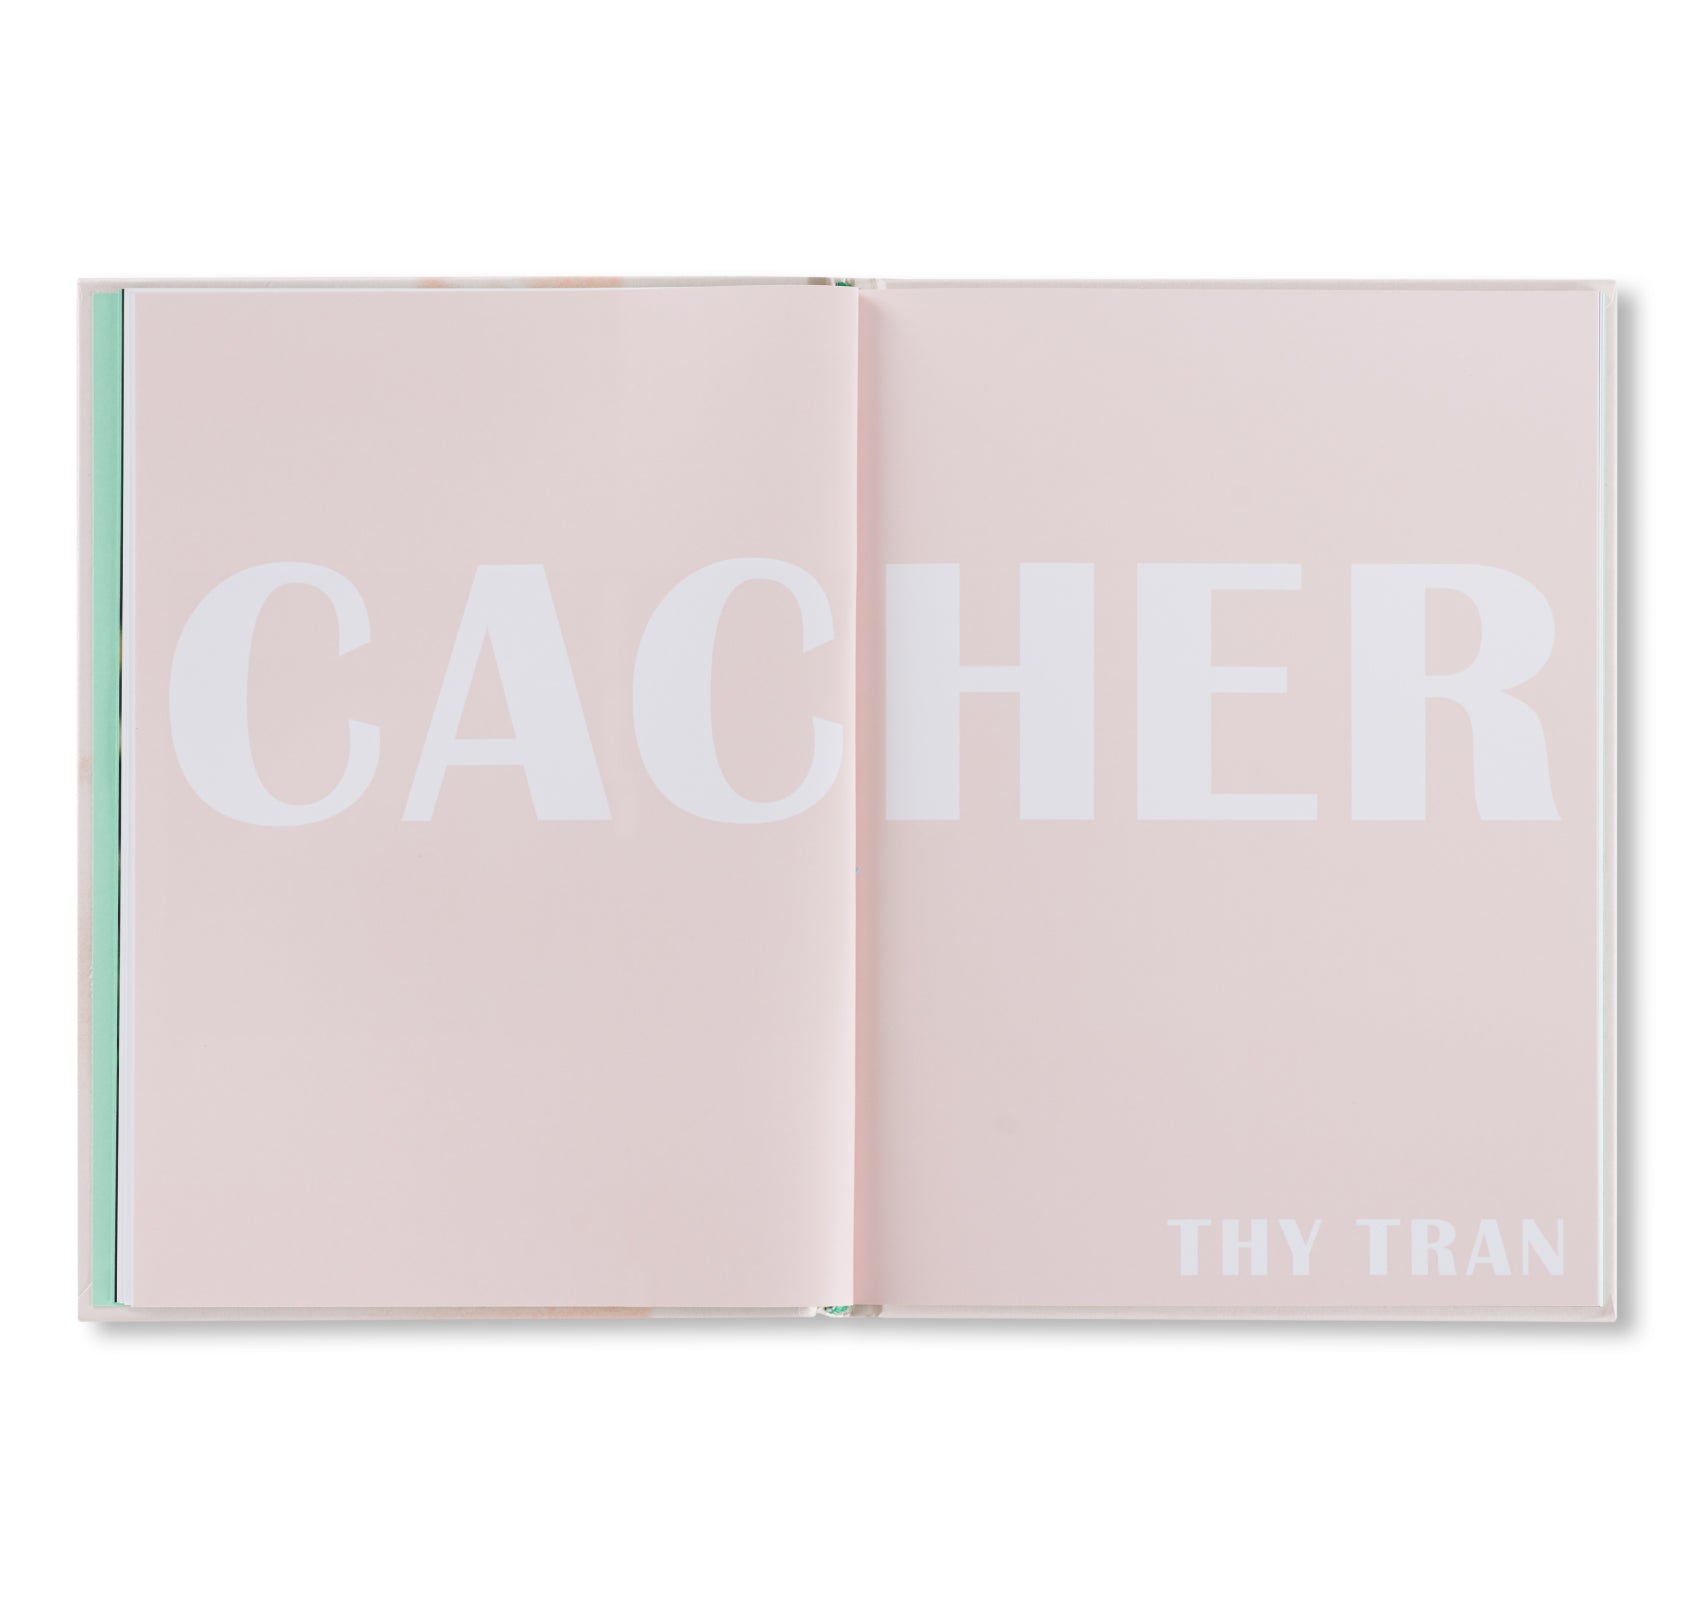 CACHER by Thy Tran